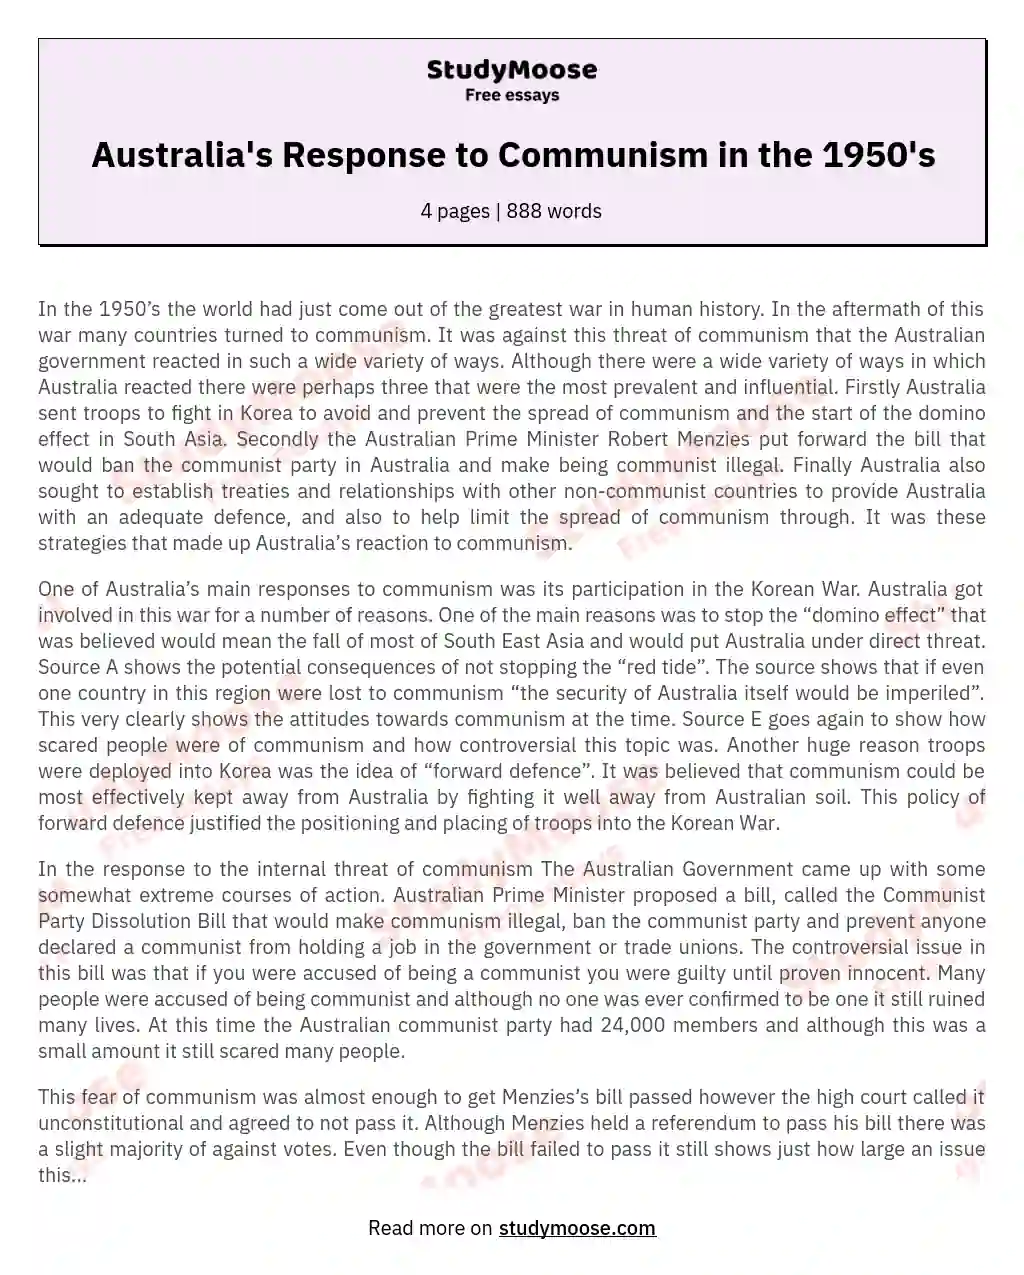 Australia's Response to Communism in the 1950's essay